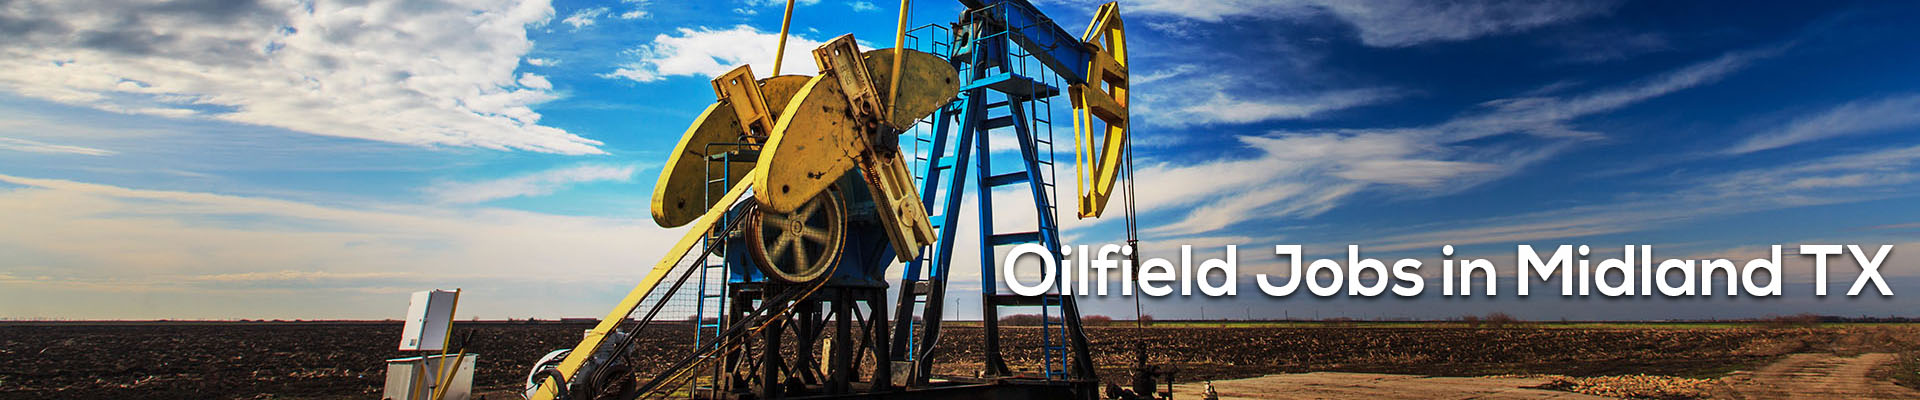 Oilfield Jobs Midland TX